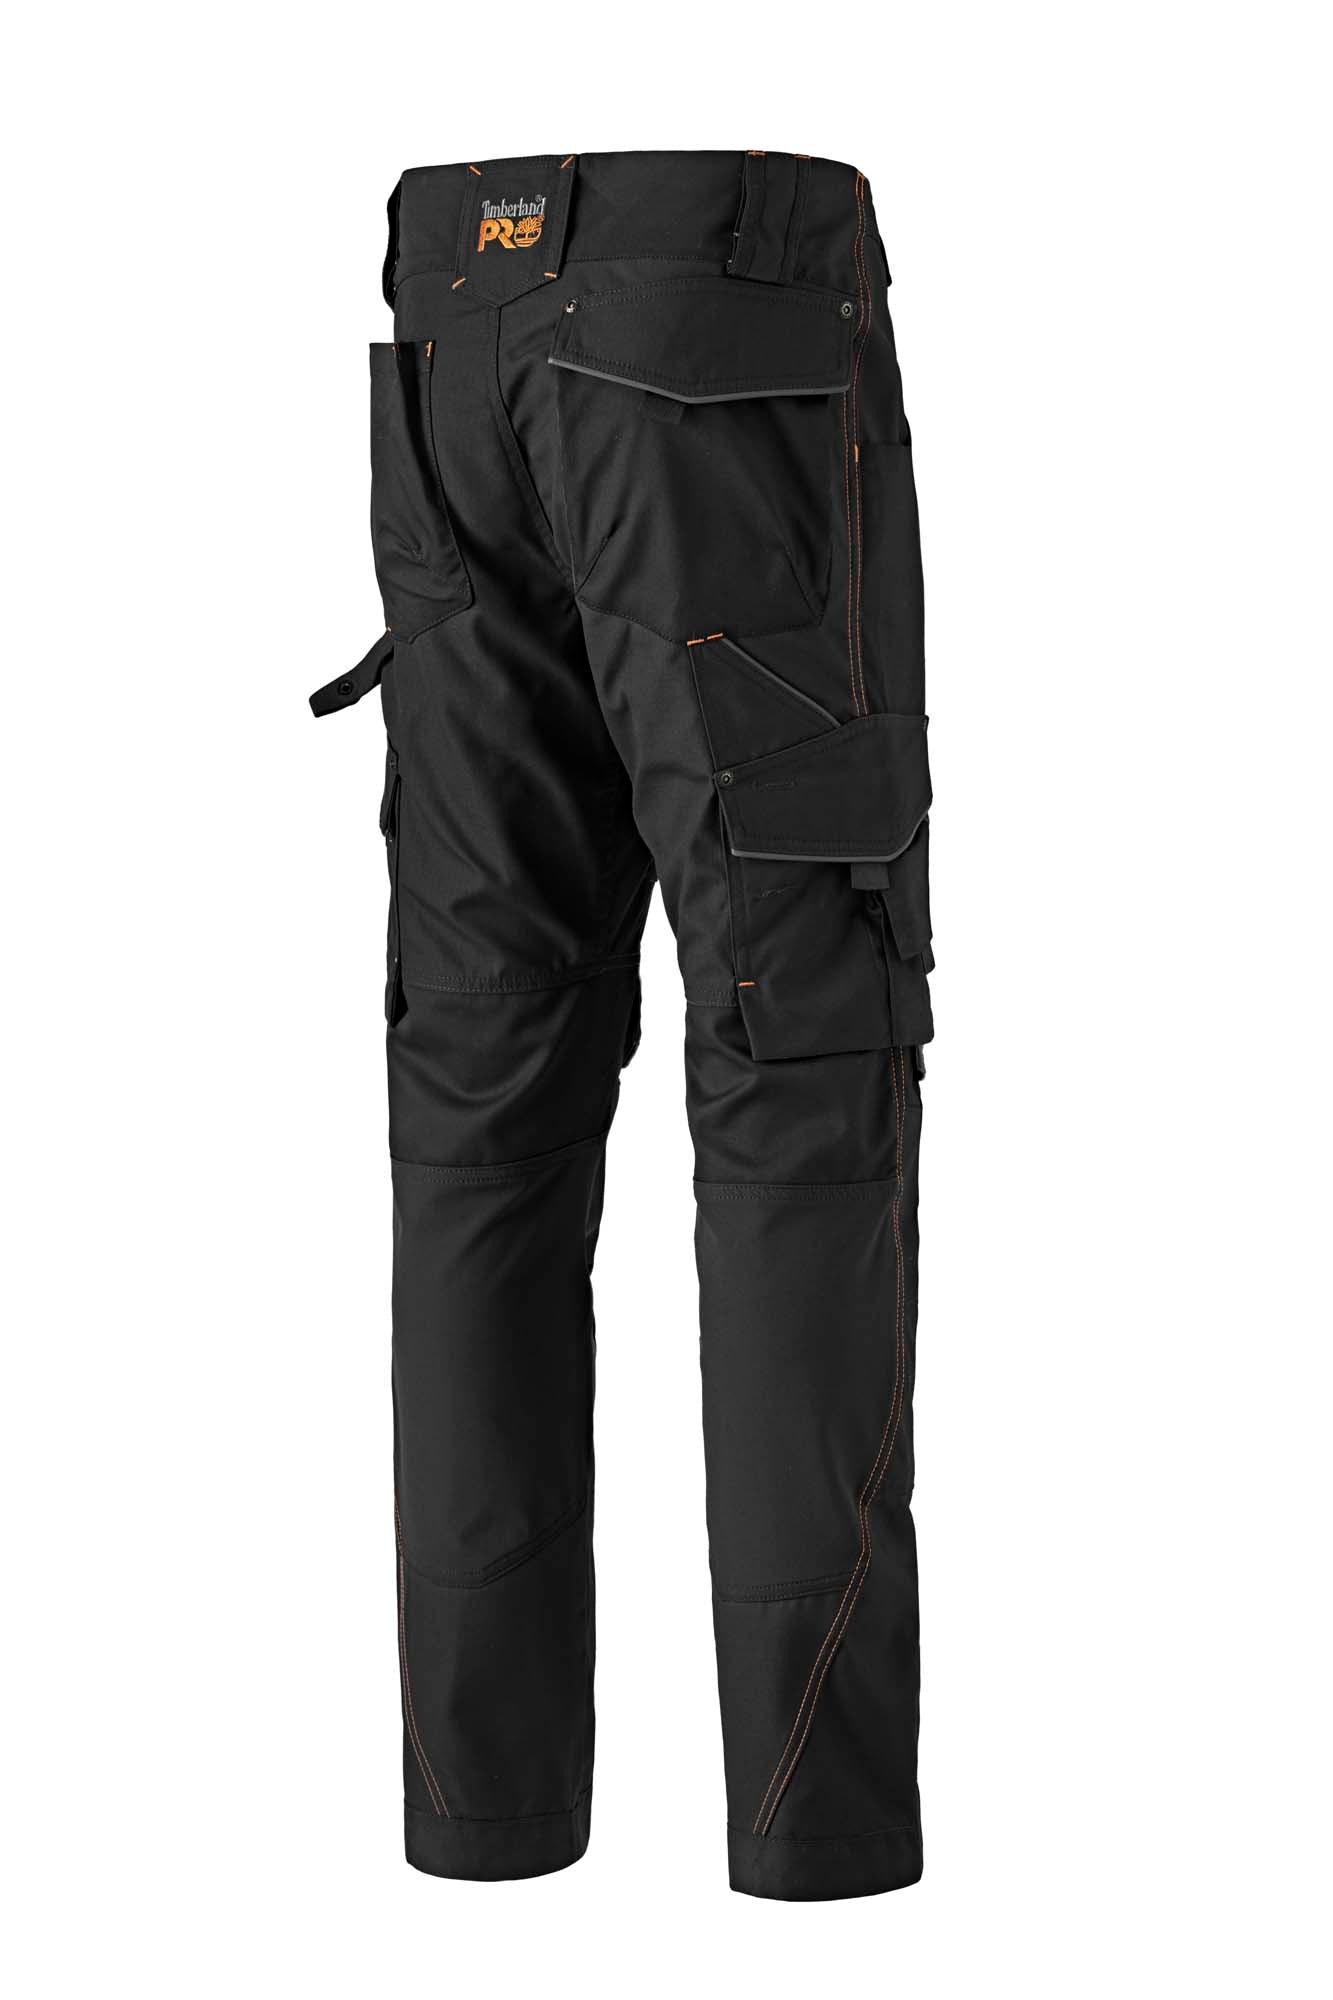 Timberland English Khaki classic men's pants waist 38 inseam 30 | eBay